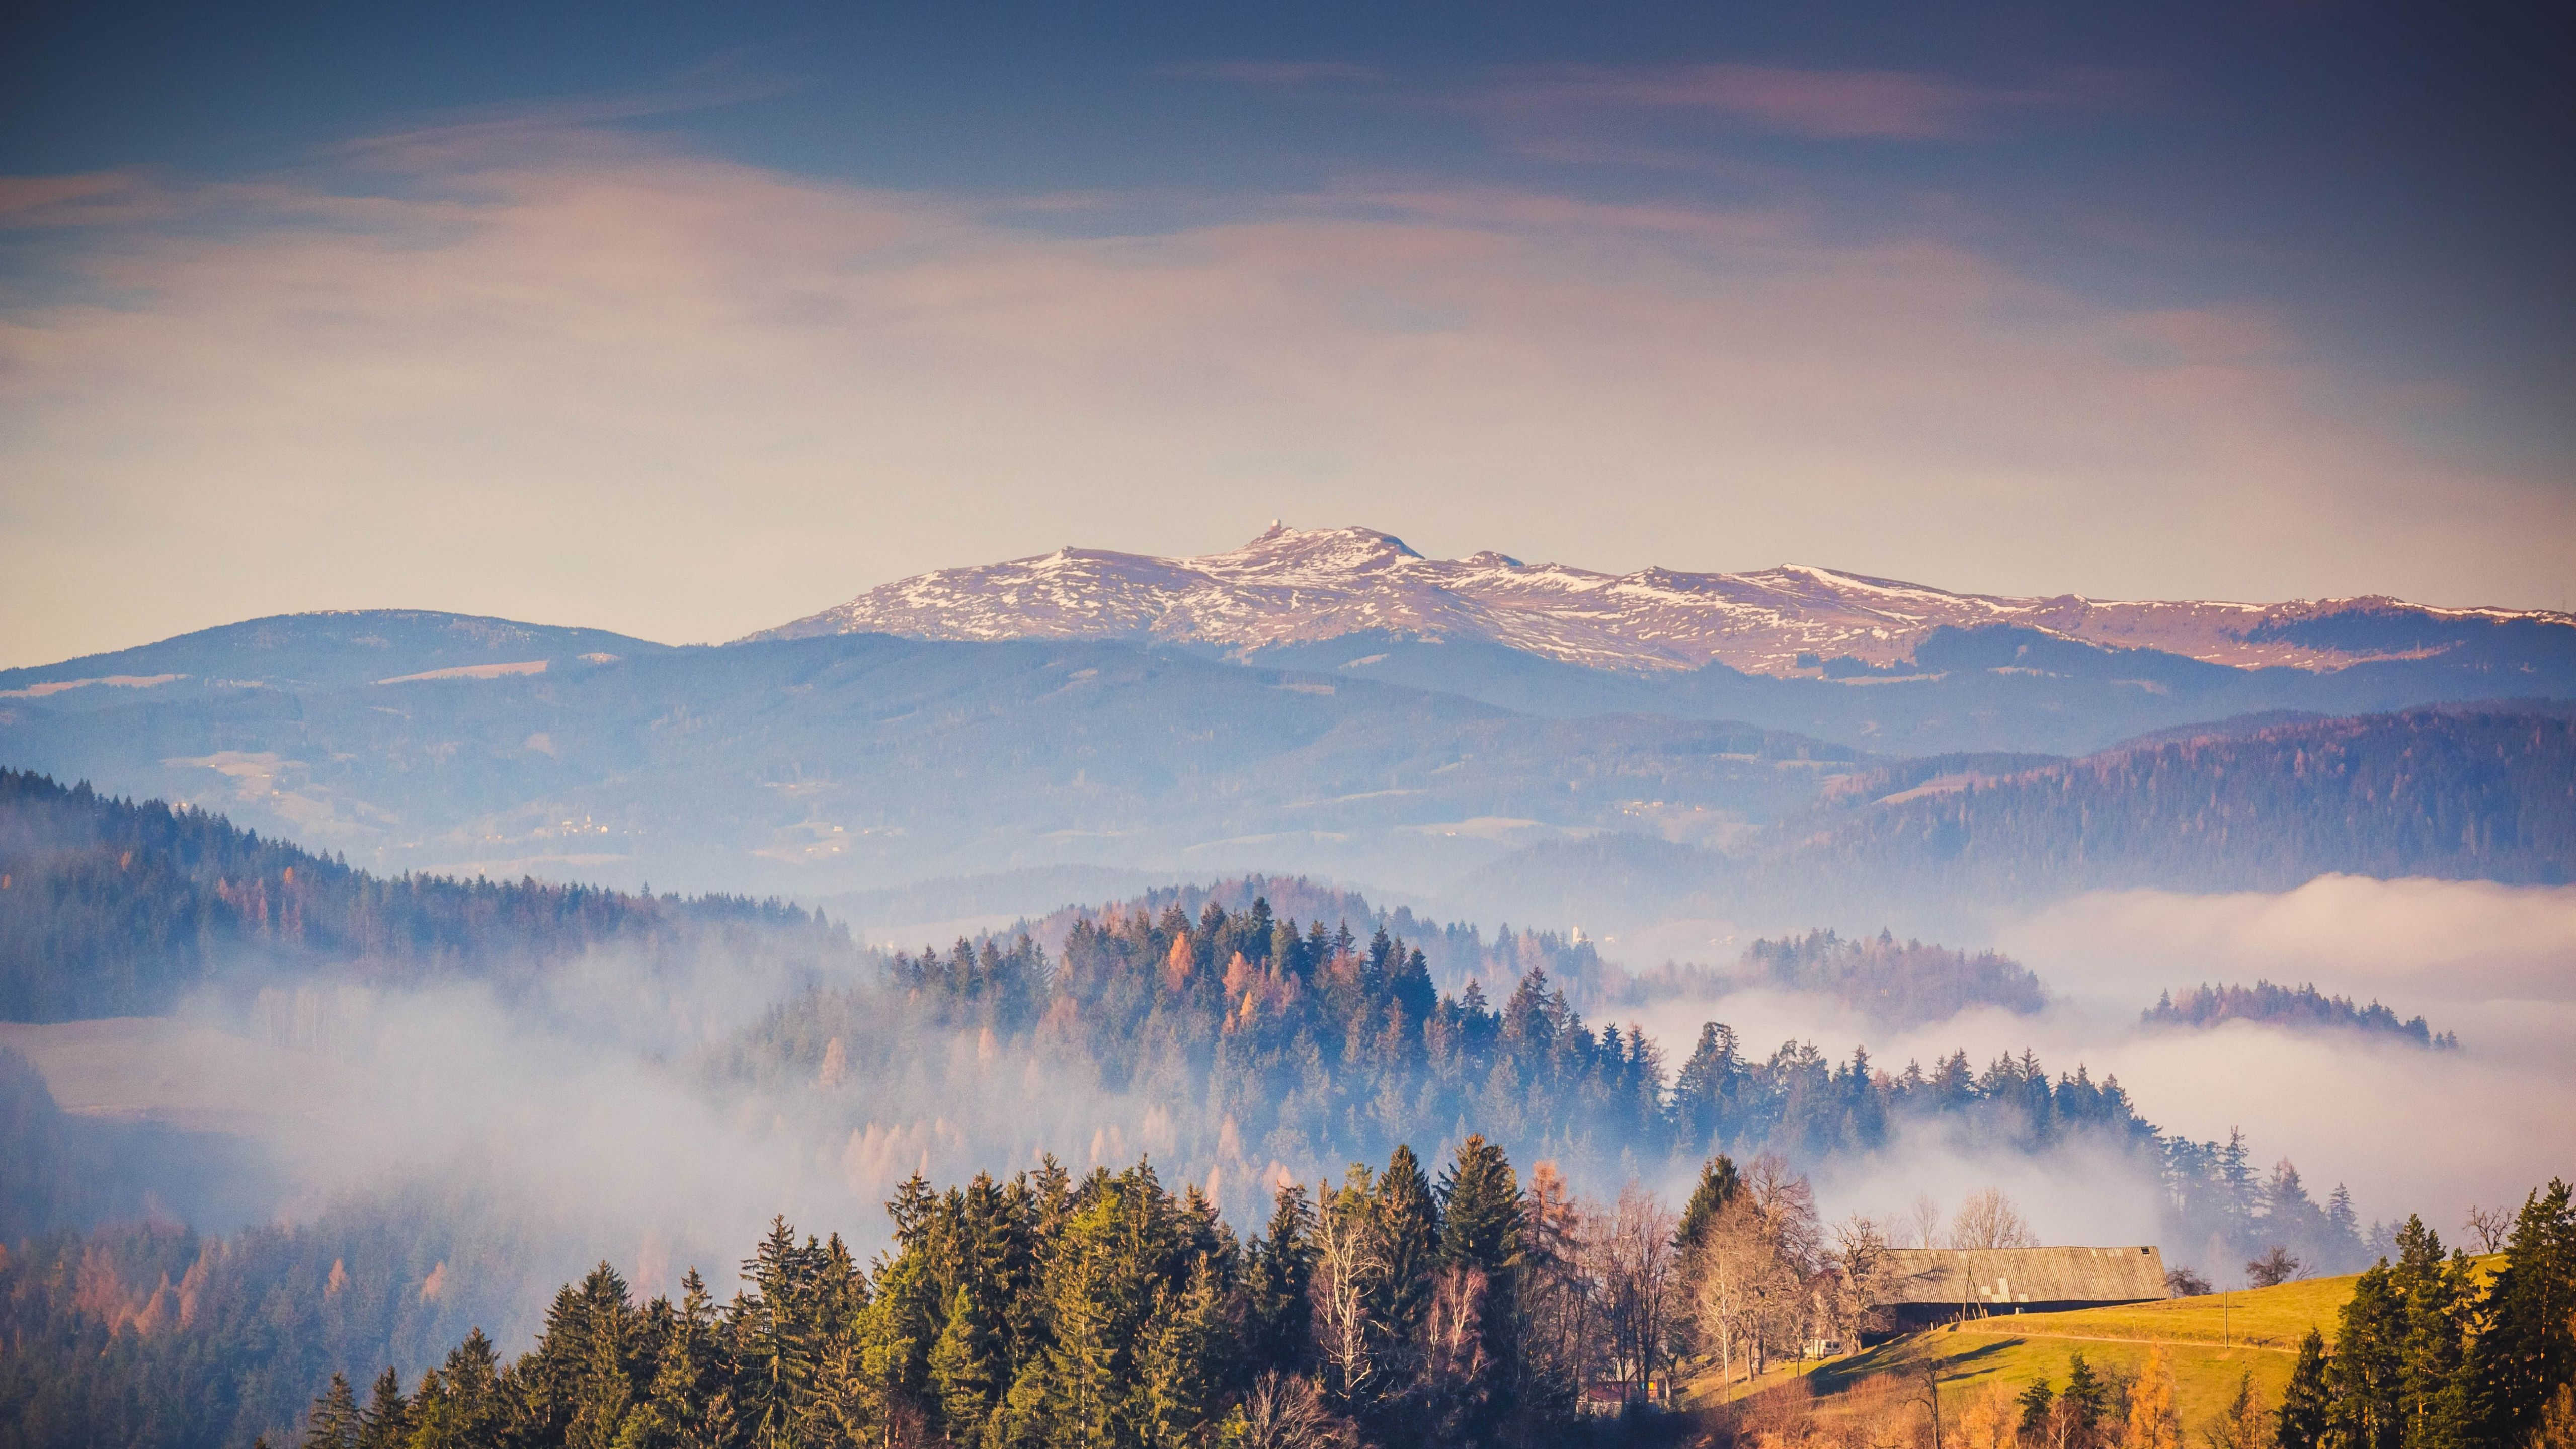 Kamnik Alps 4K Wallpaper, Mountain range, Forest, Mountains, Landscape, Mist, Mountains, Travel, Nature